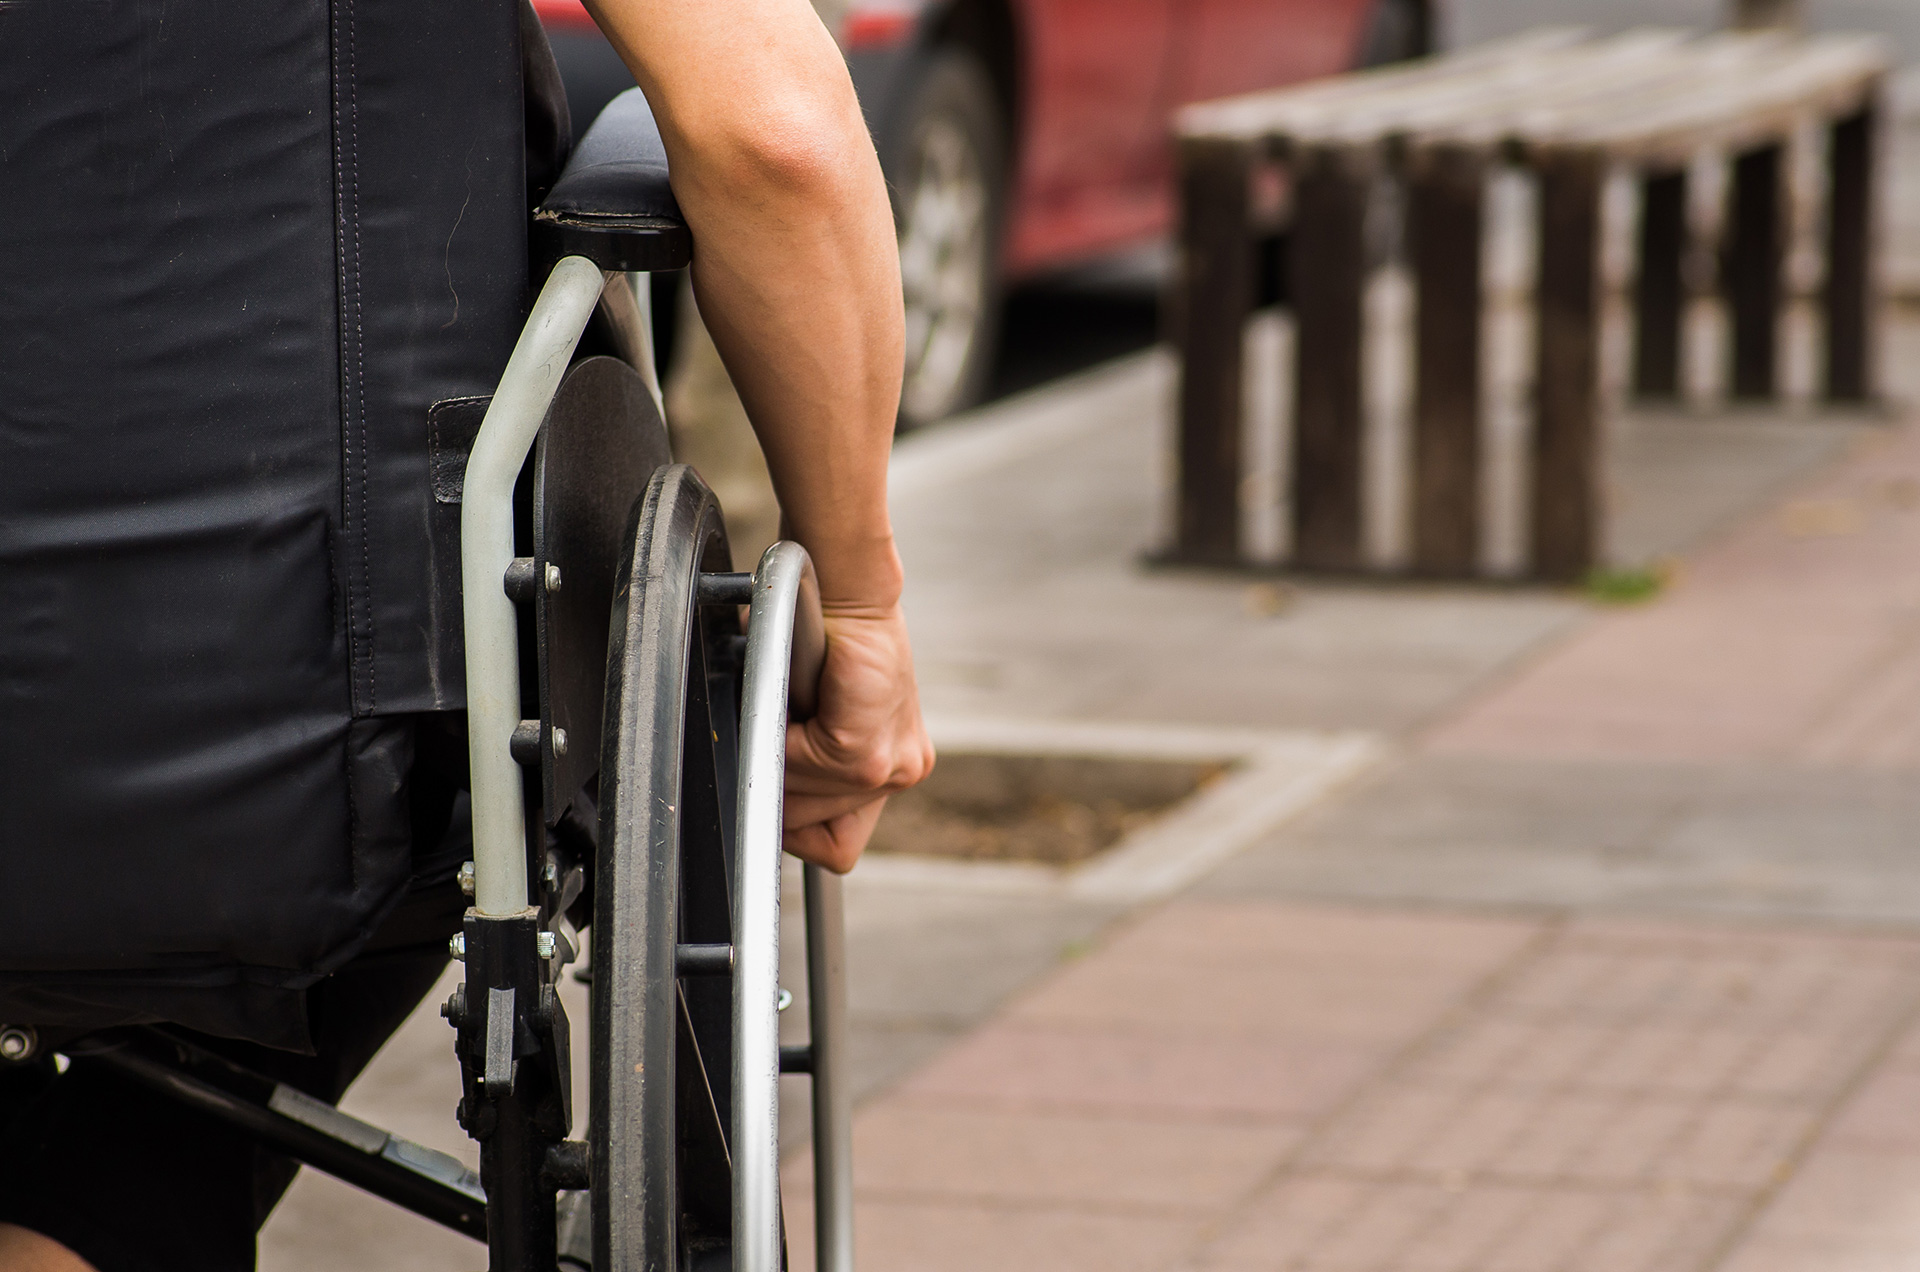 Personne en situation de handicap © Fotos 573 / Shutterstock 709435276